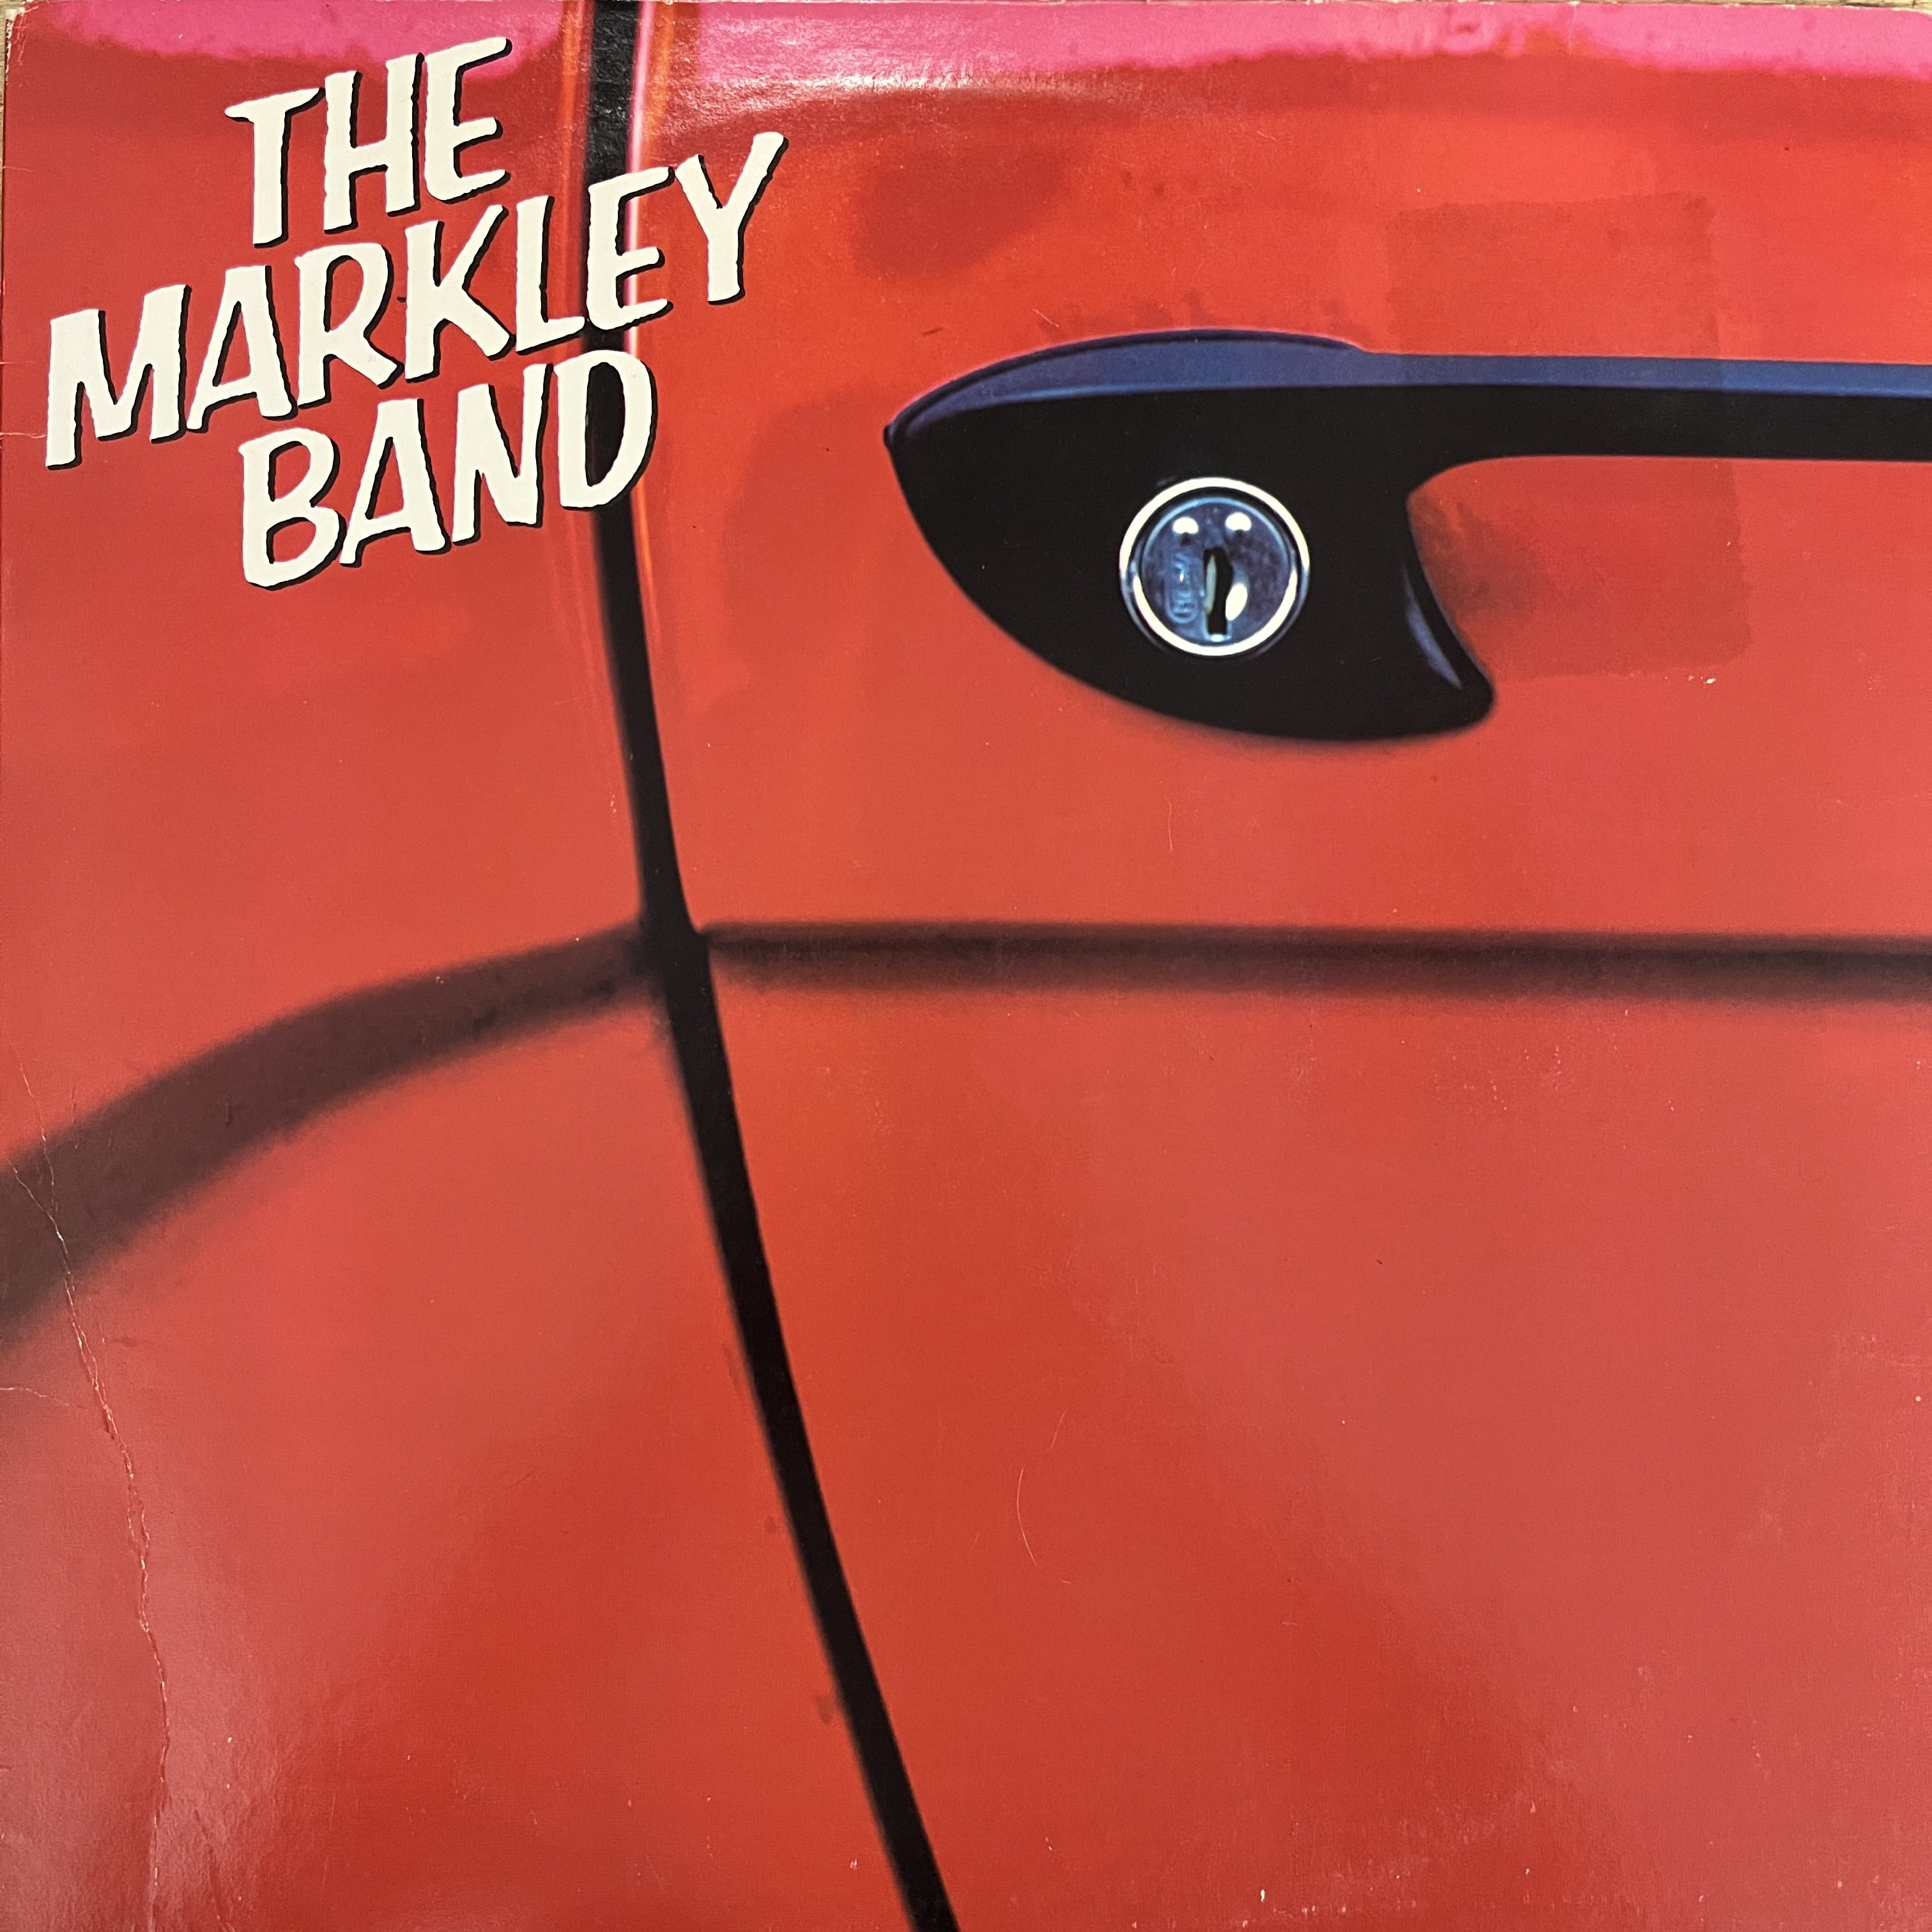 The Markley Band